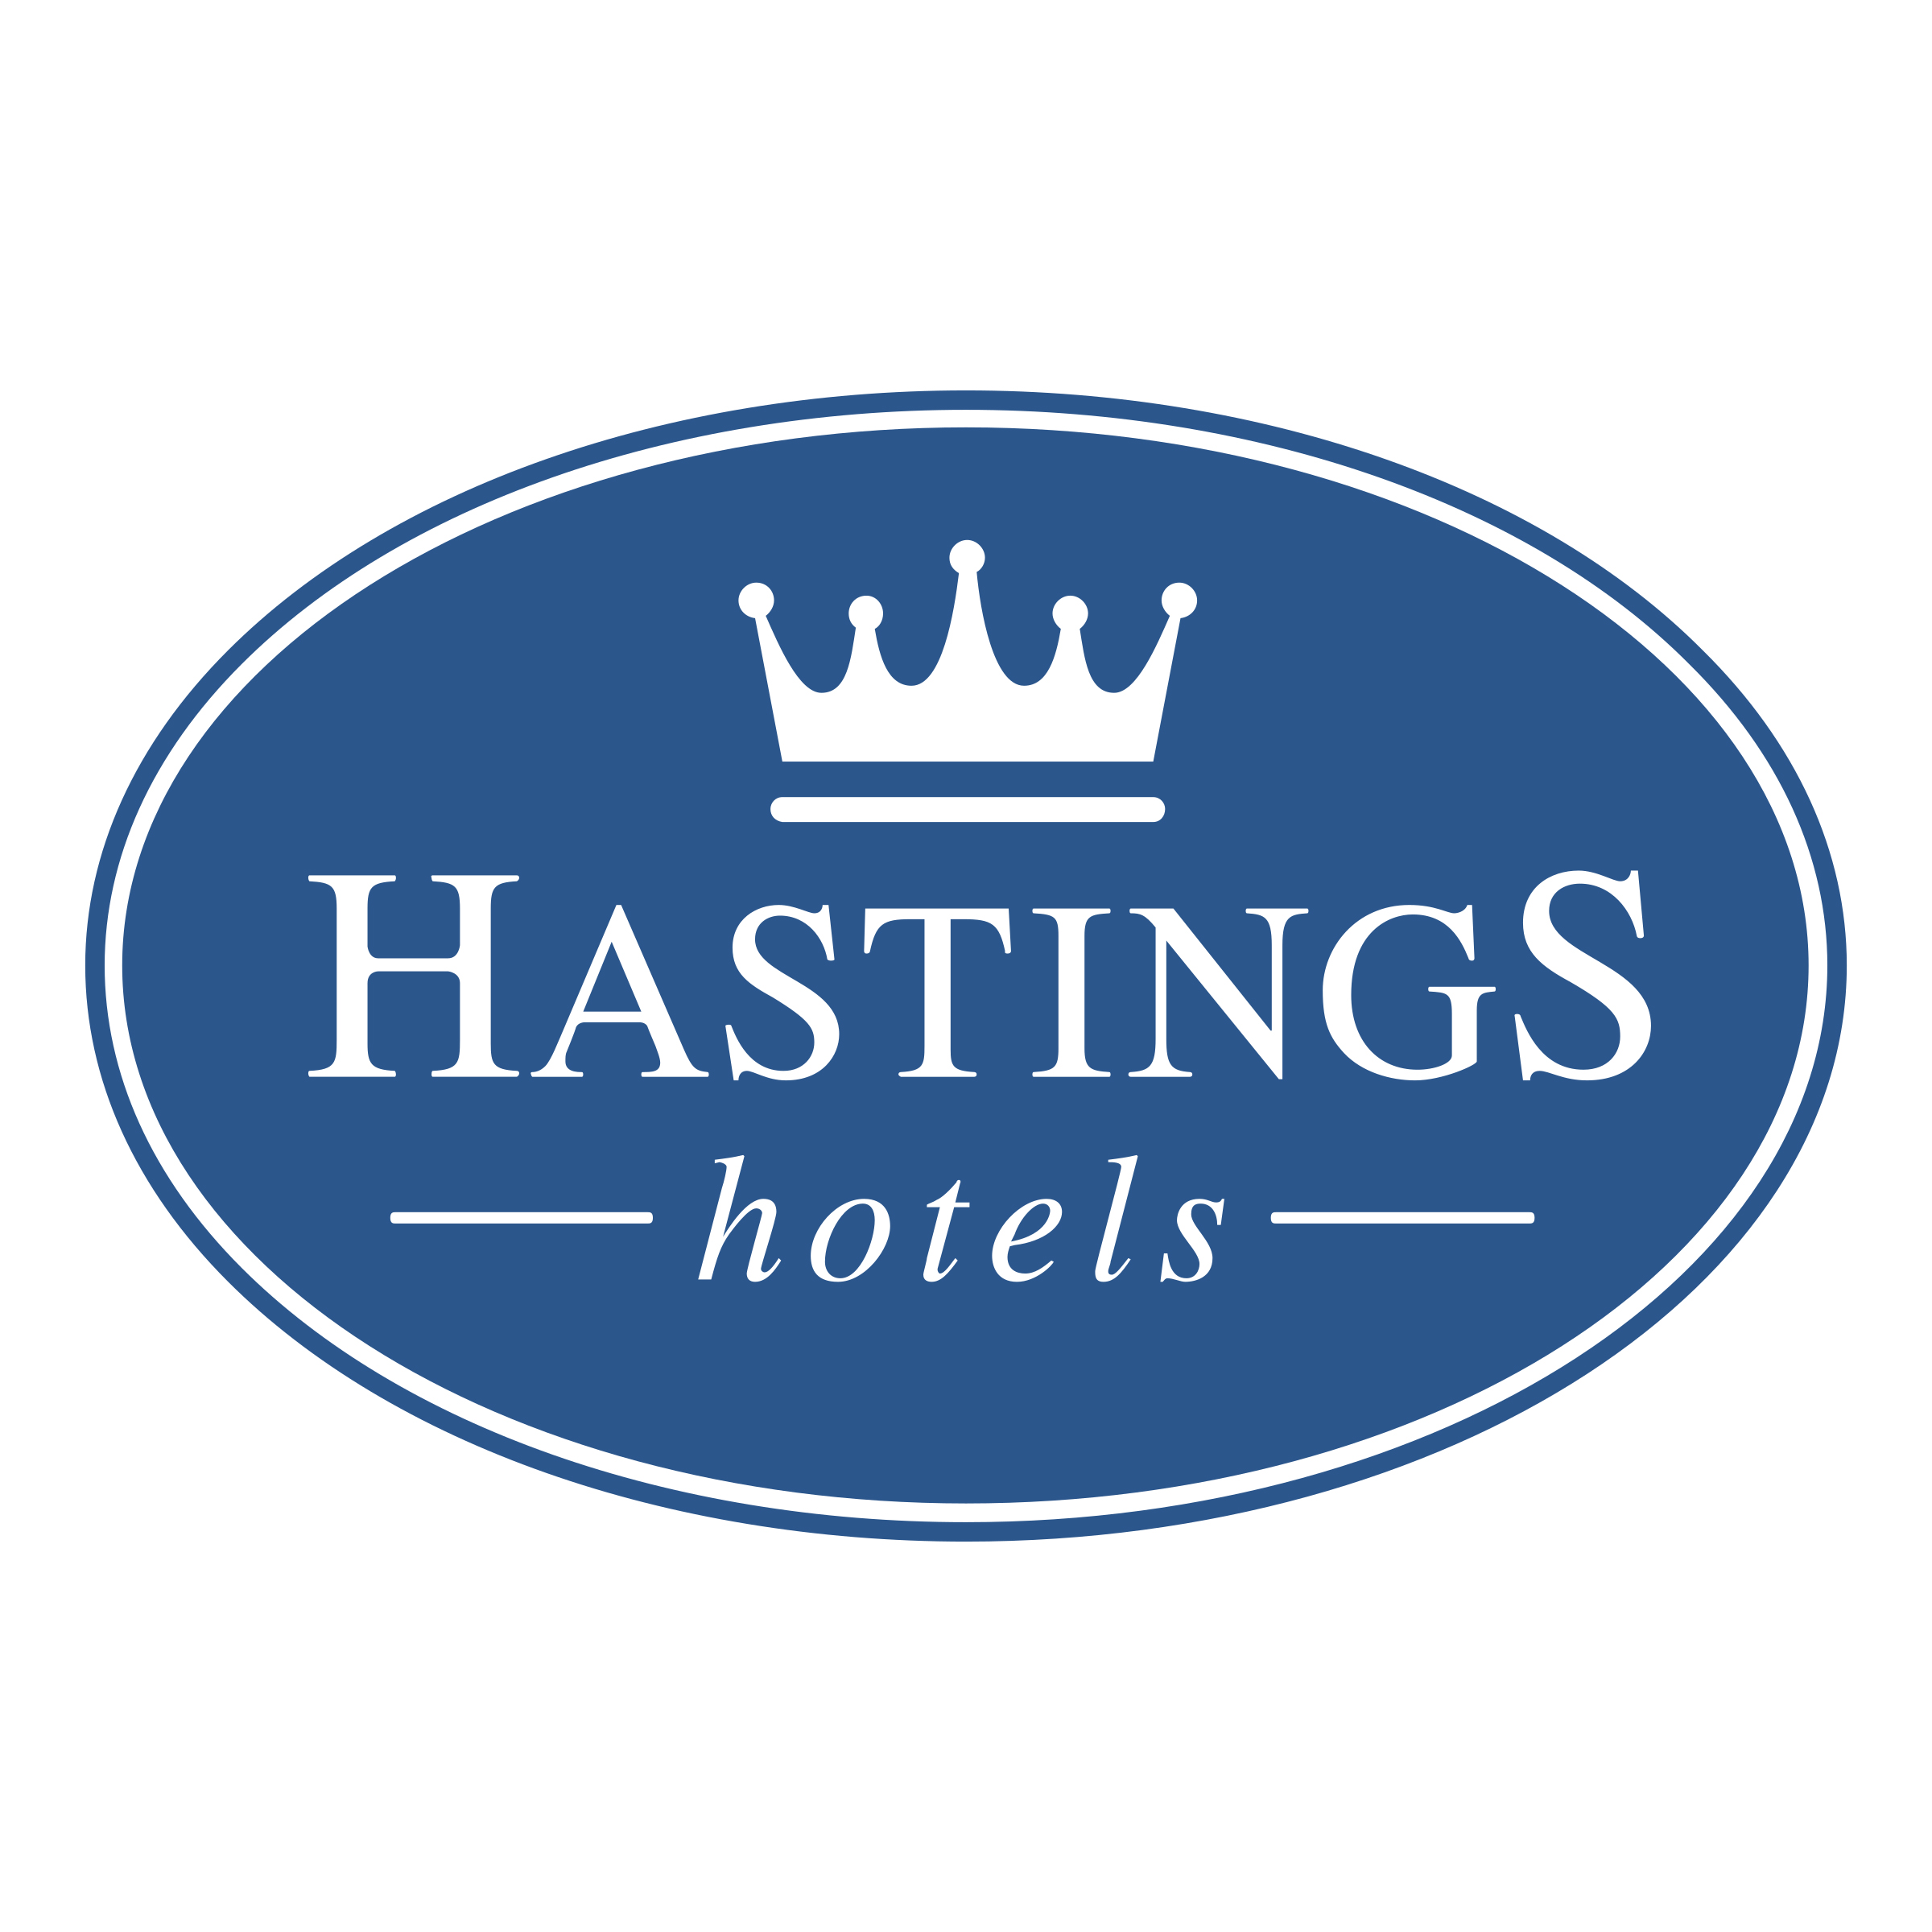 hastings-hotels-logo-png-transparent